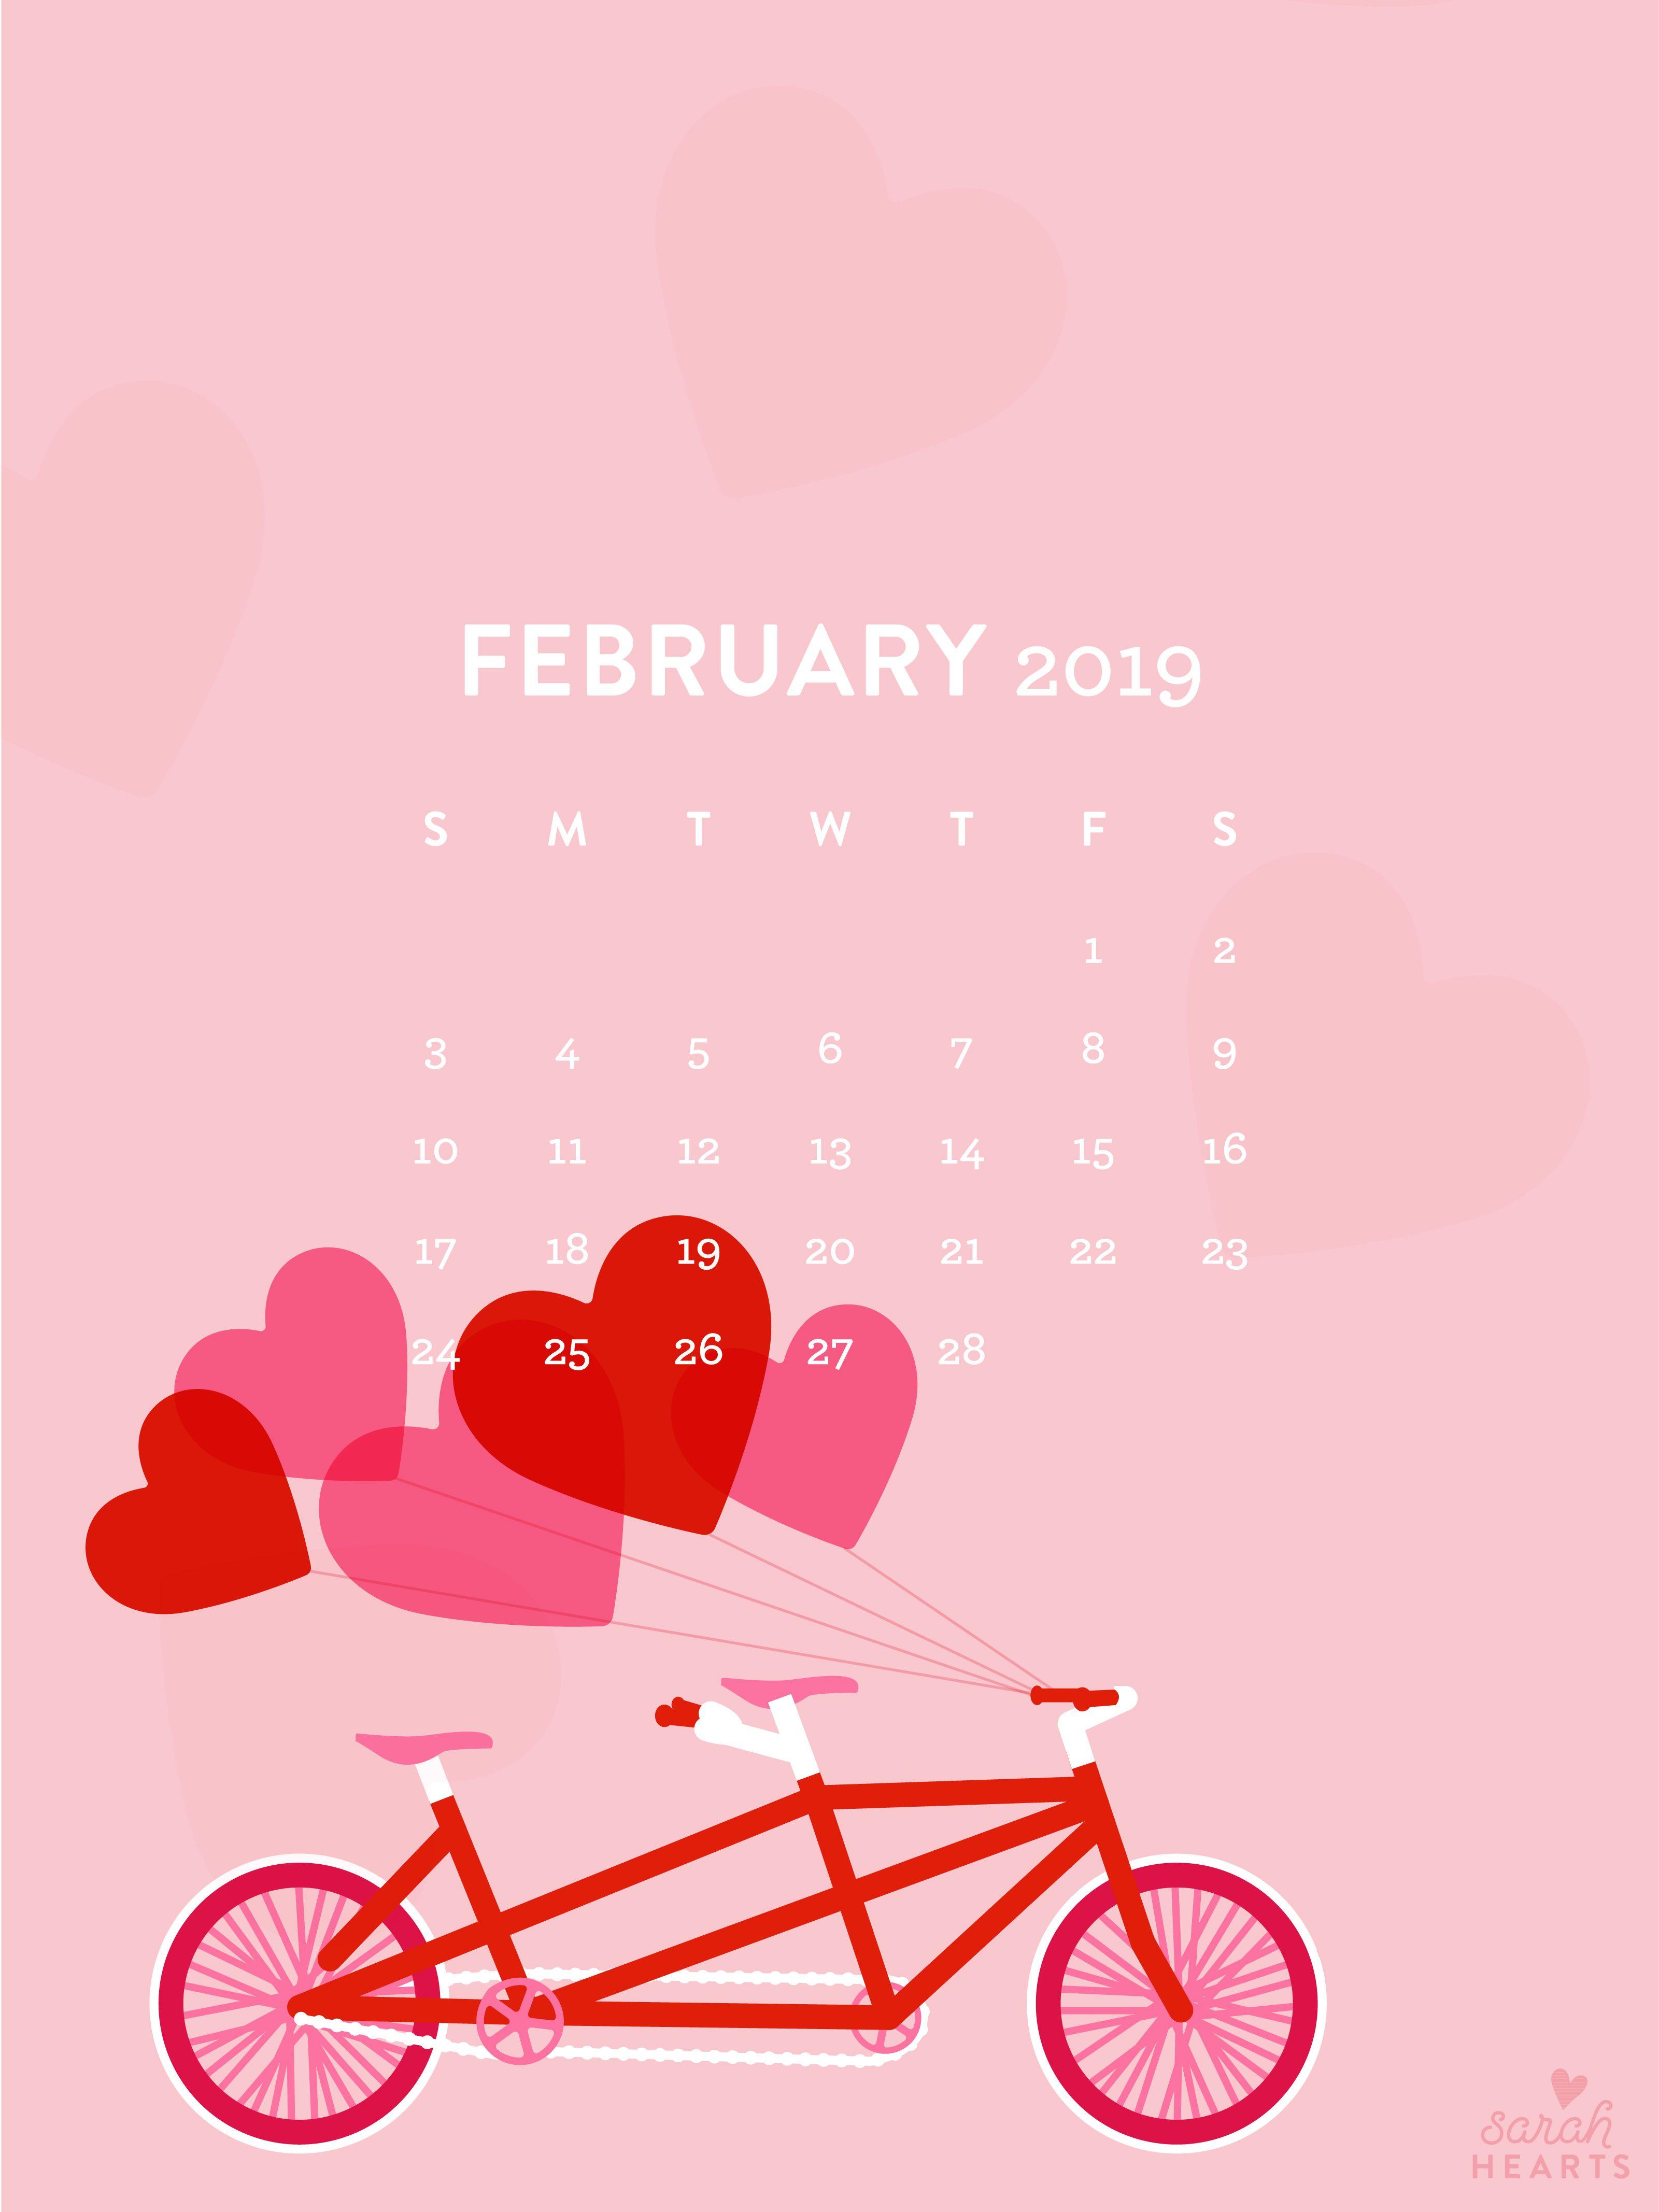 February 2019 Tandem Bike Calendar Wallpaper